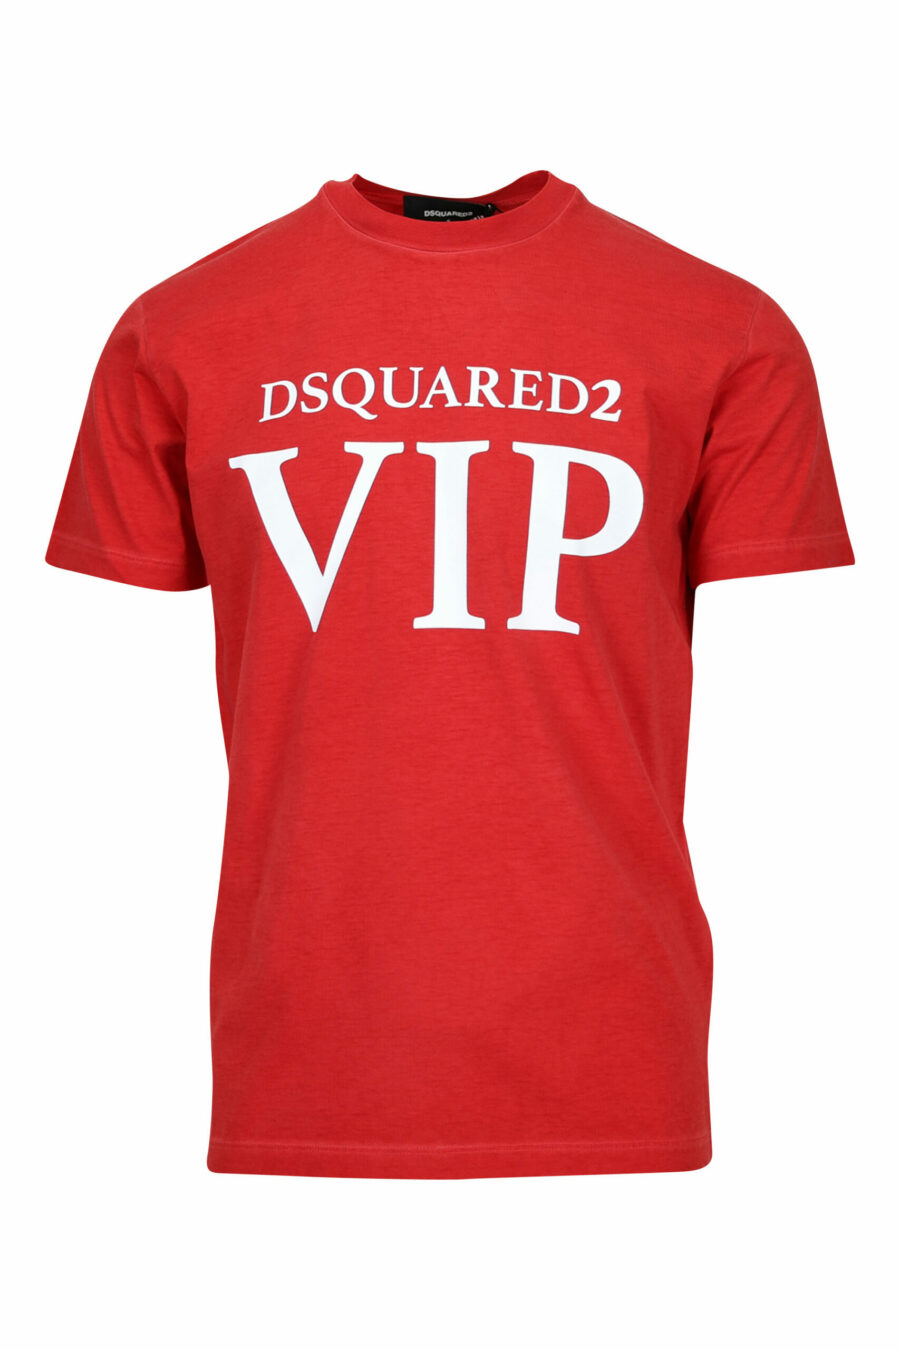 Rotes T-Shirt mit "vip" Maxilogo - 8054148578923 skaliert